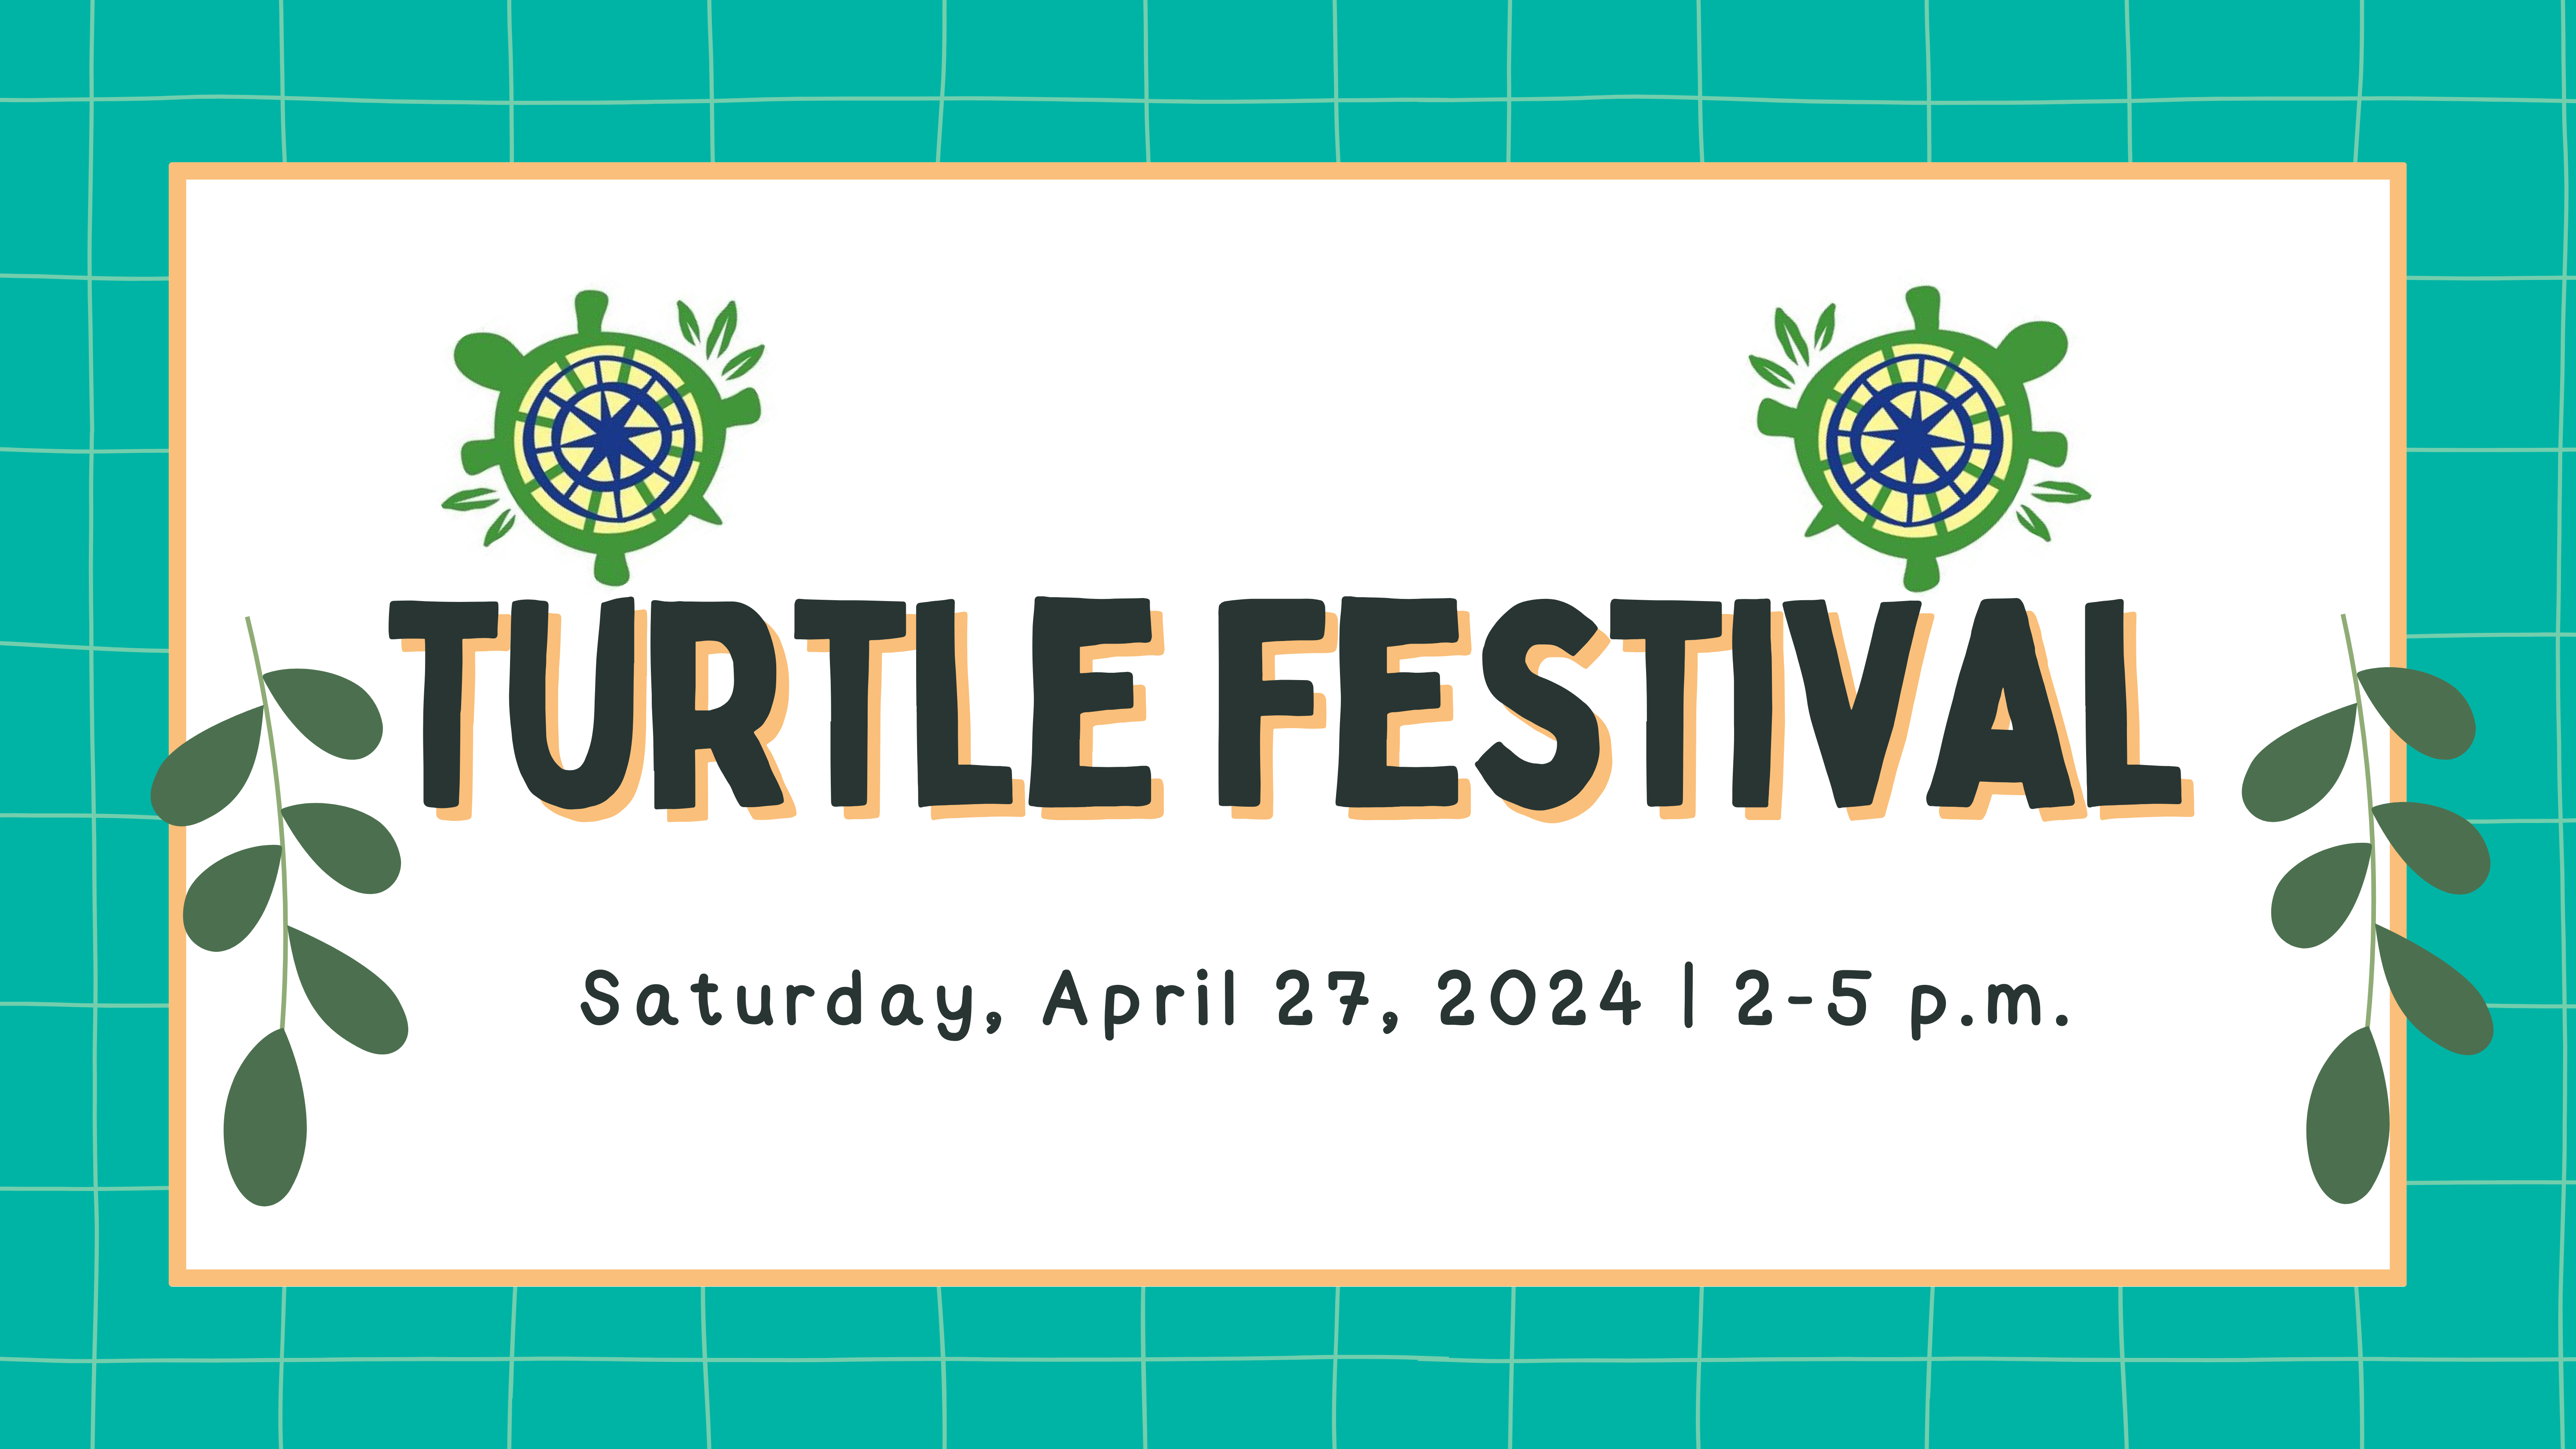 Turtle Festival Saturday, April 27, 2024 | 2-5 p.m.